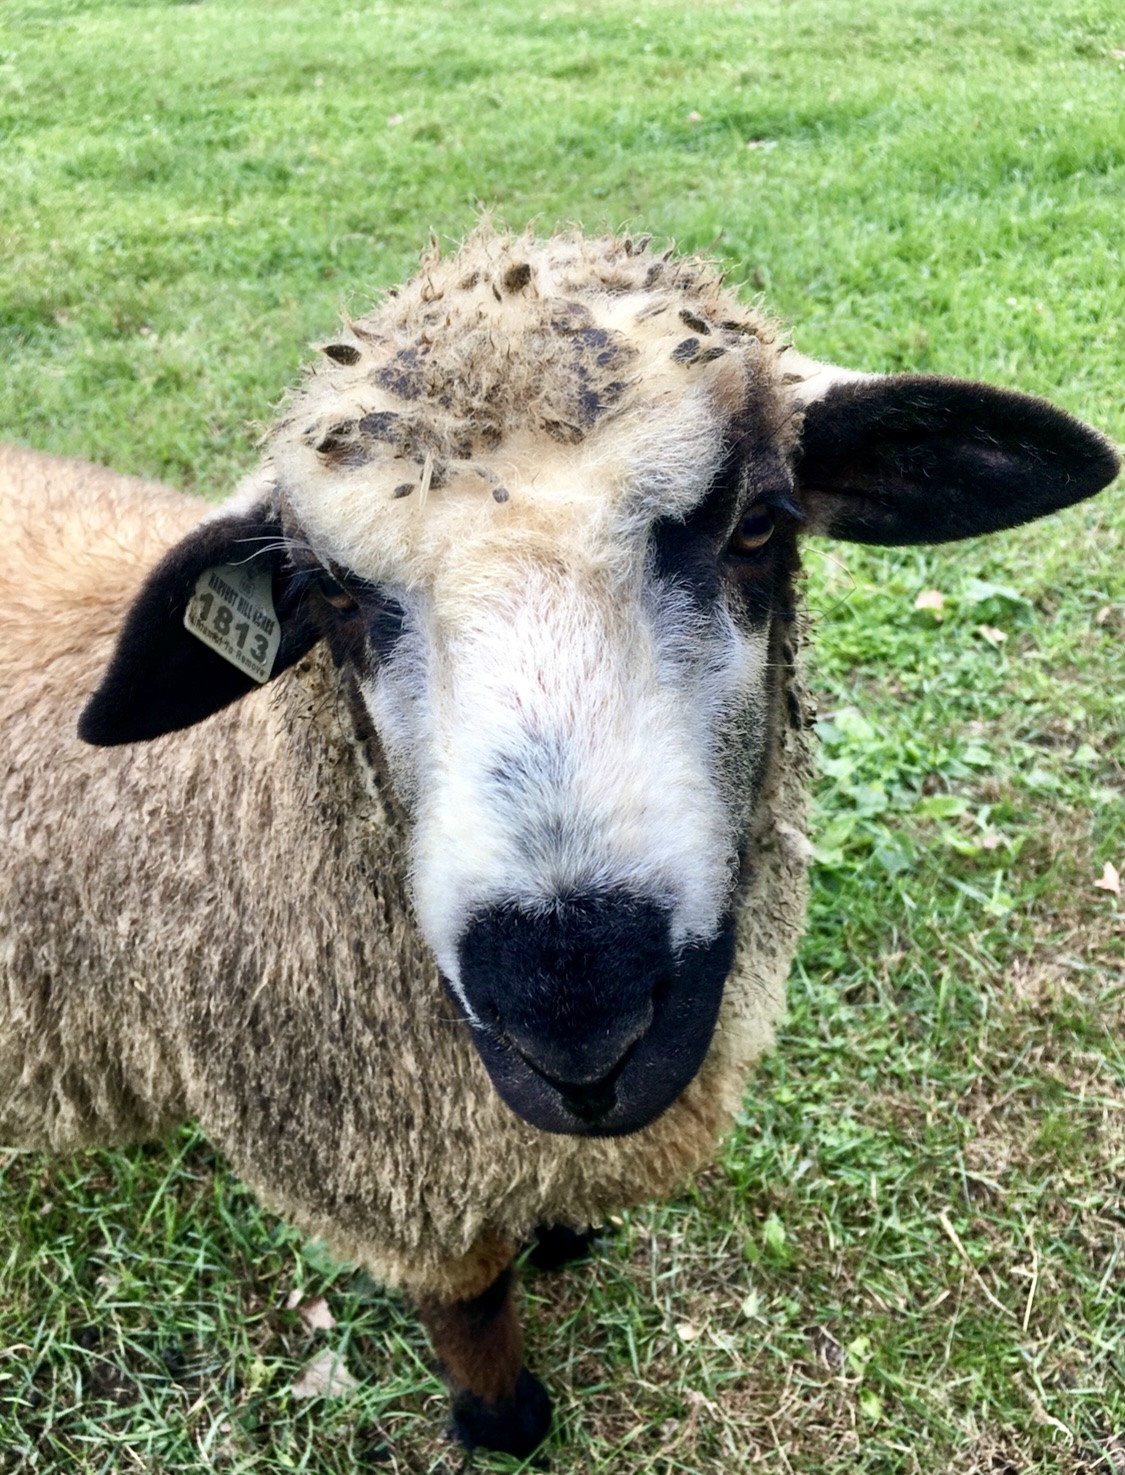 Lamb, sheep and wool updates will be a topic at the North Dakota Lamb and Wool Convention provides. (NDSU photo)